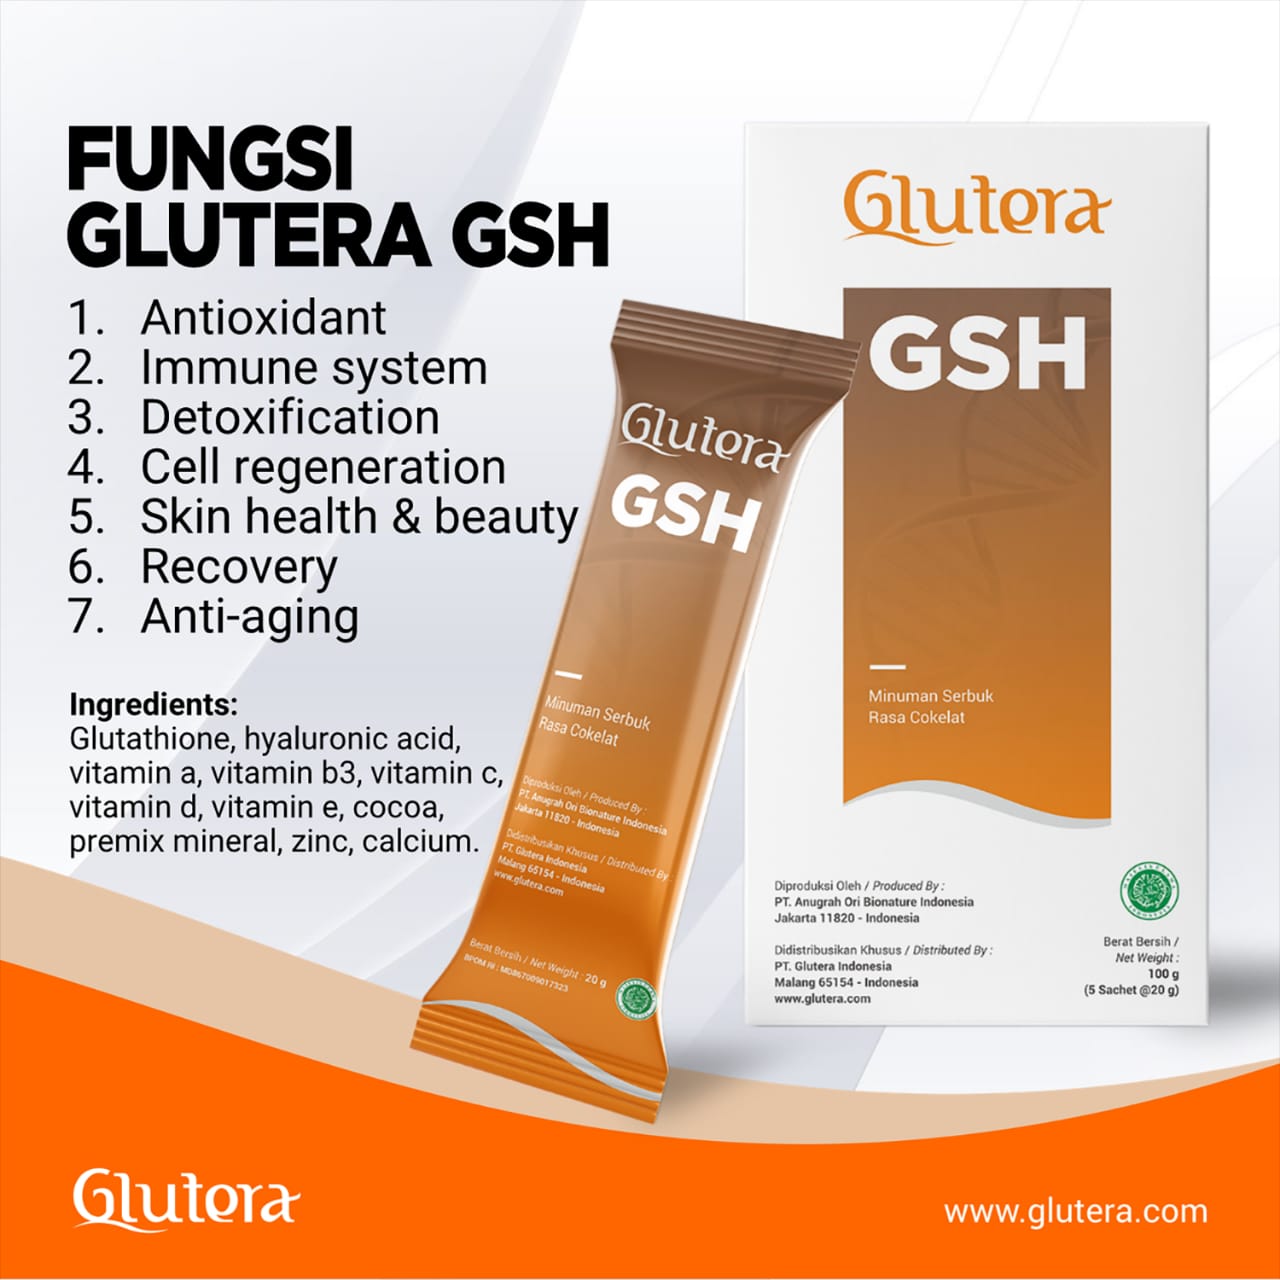 Fungsi-Glutera-GSH.jpg